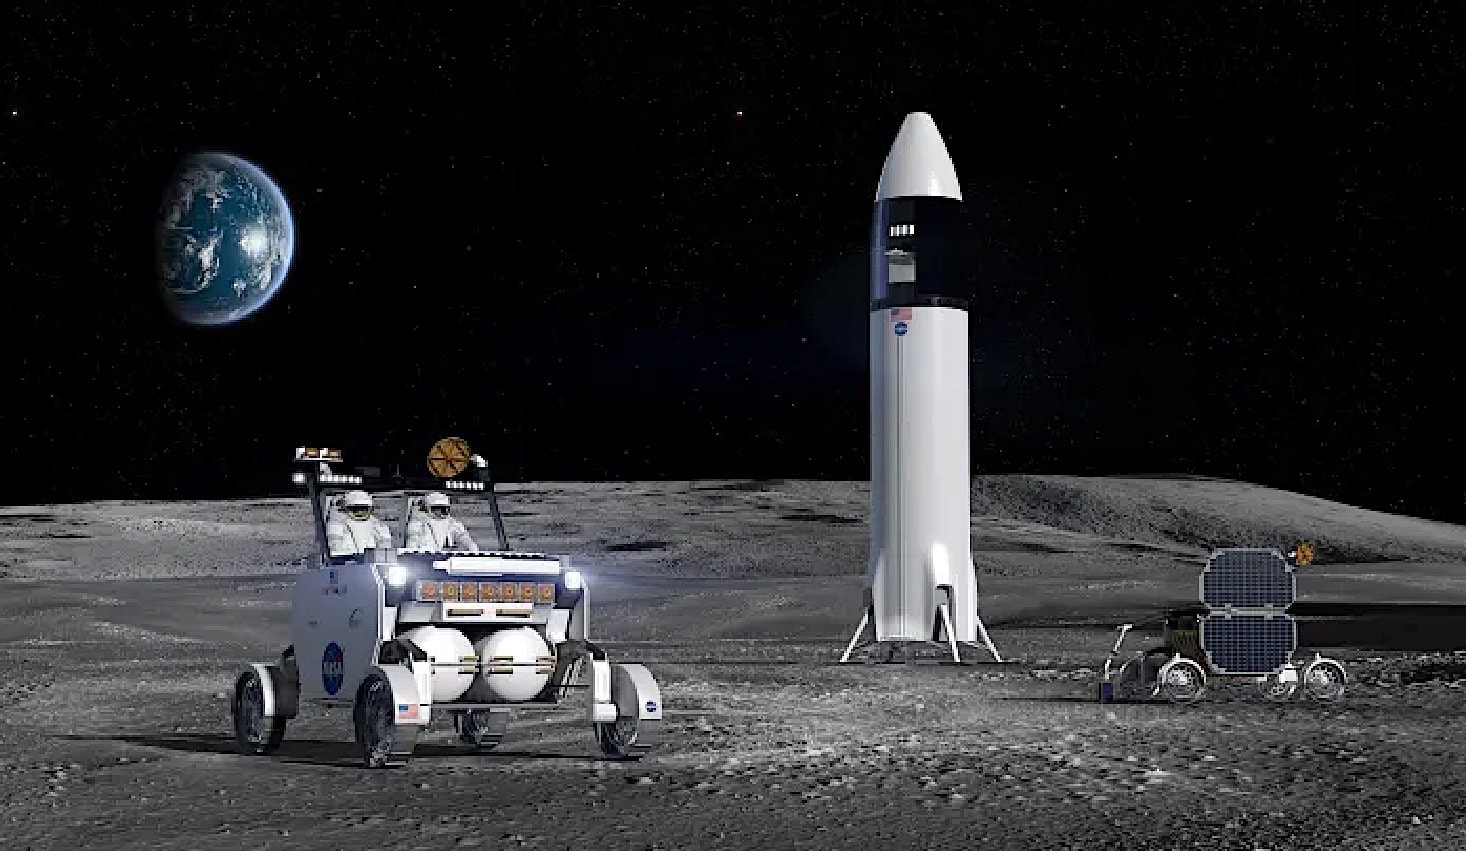 FLEX Moon Rover Proposal & NASA's Lunar Exploration